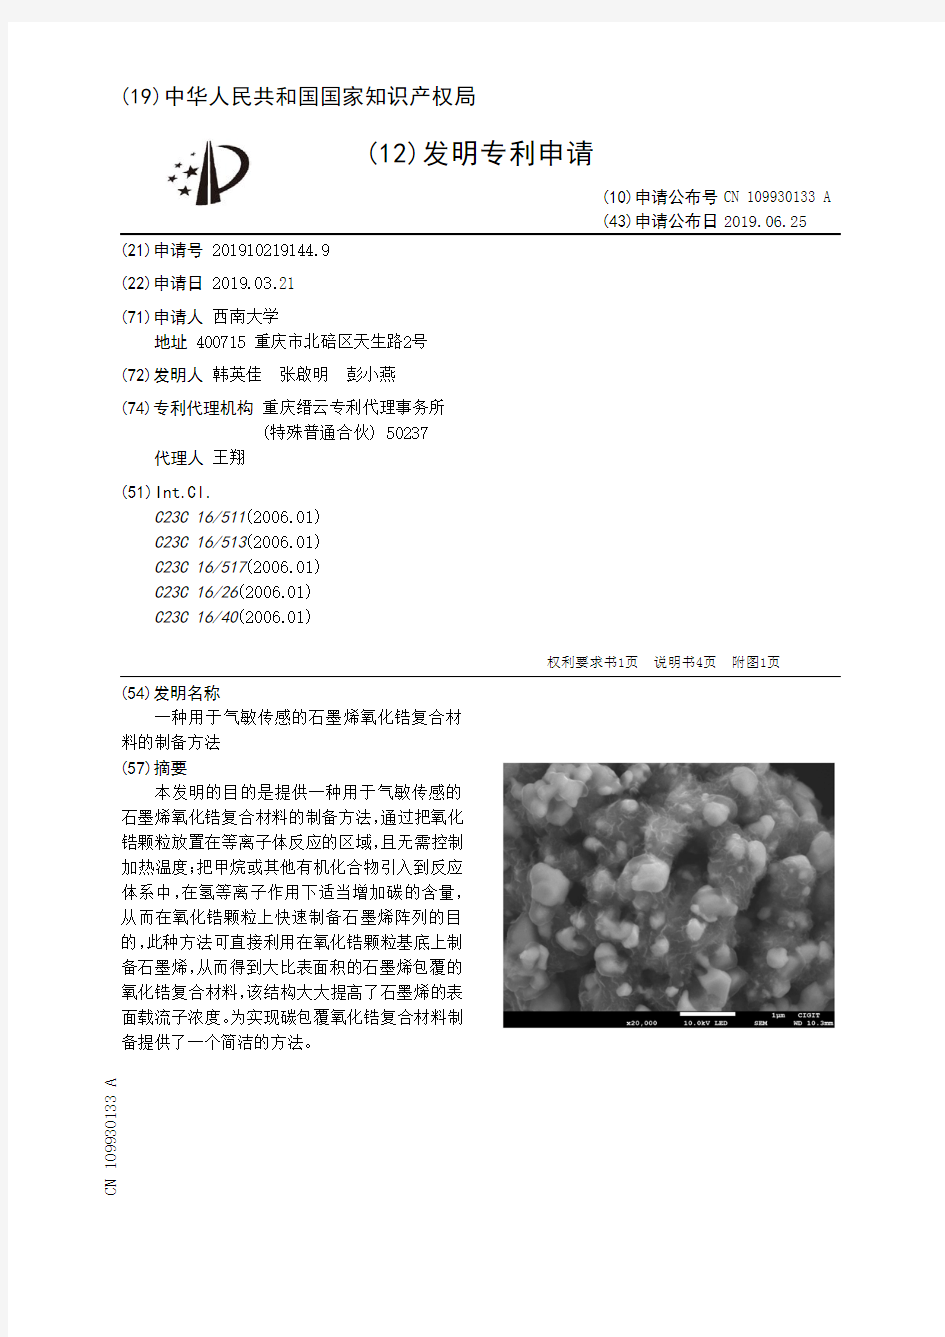 【CN109930133A】一种用于气敏传感的石墨烯氧化锆复合材料的制备方法【专利】